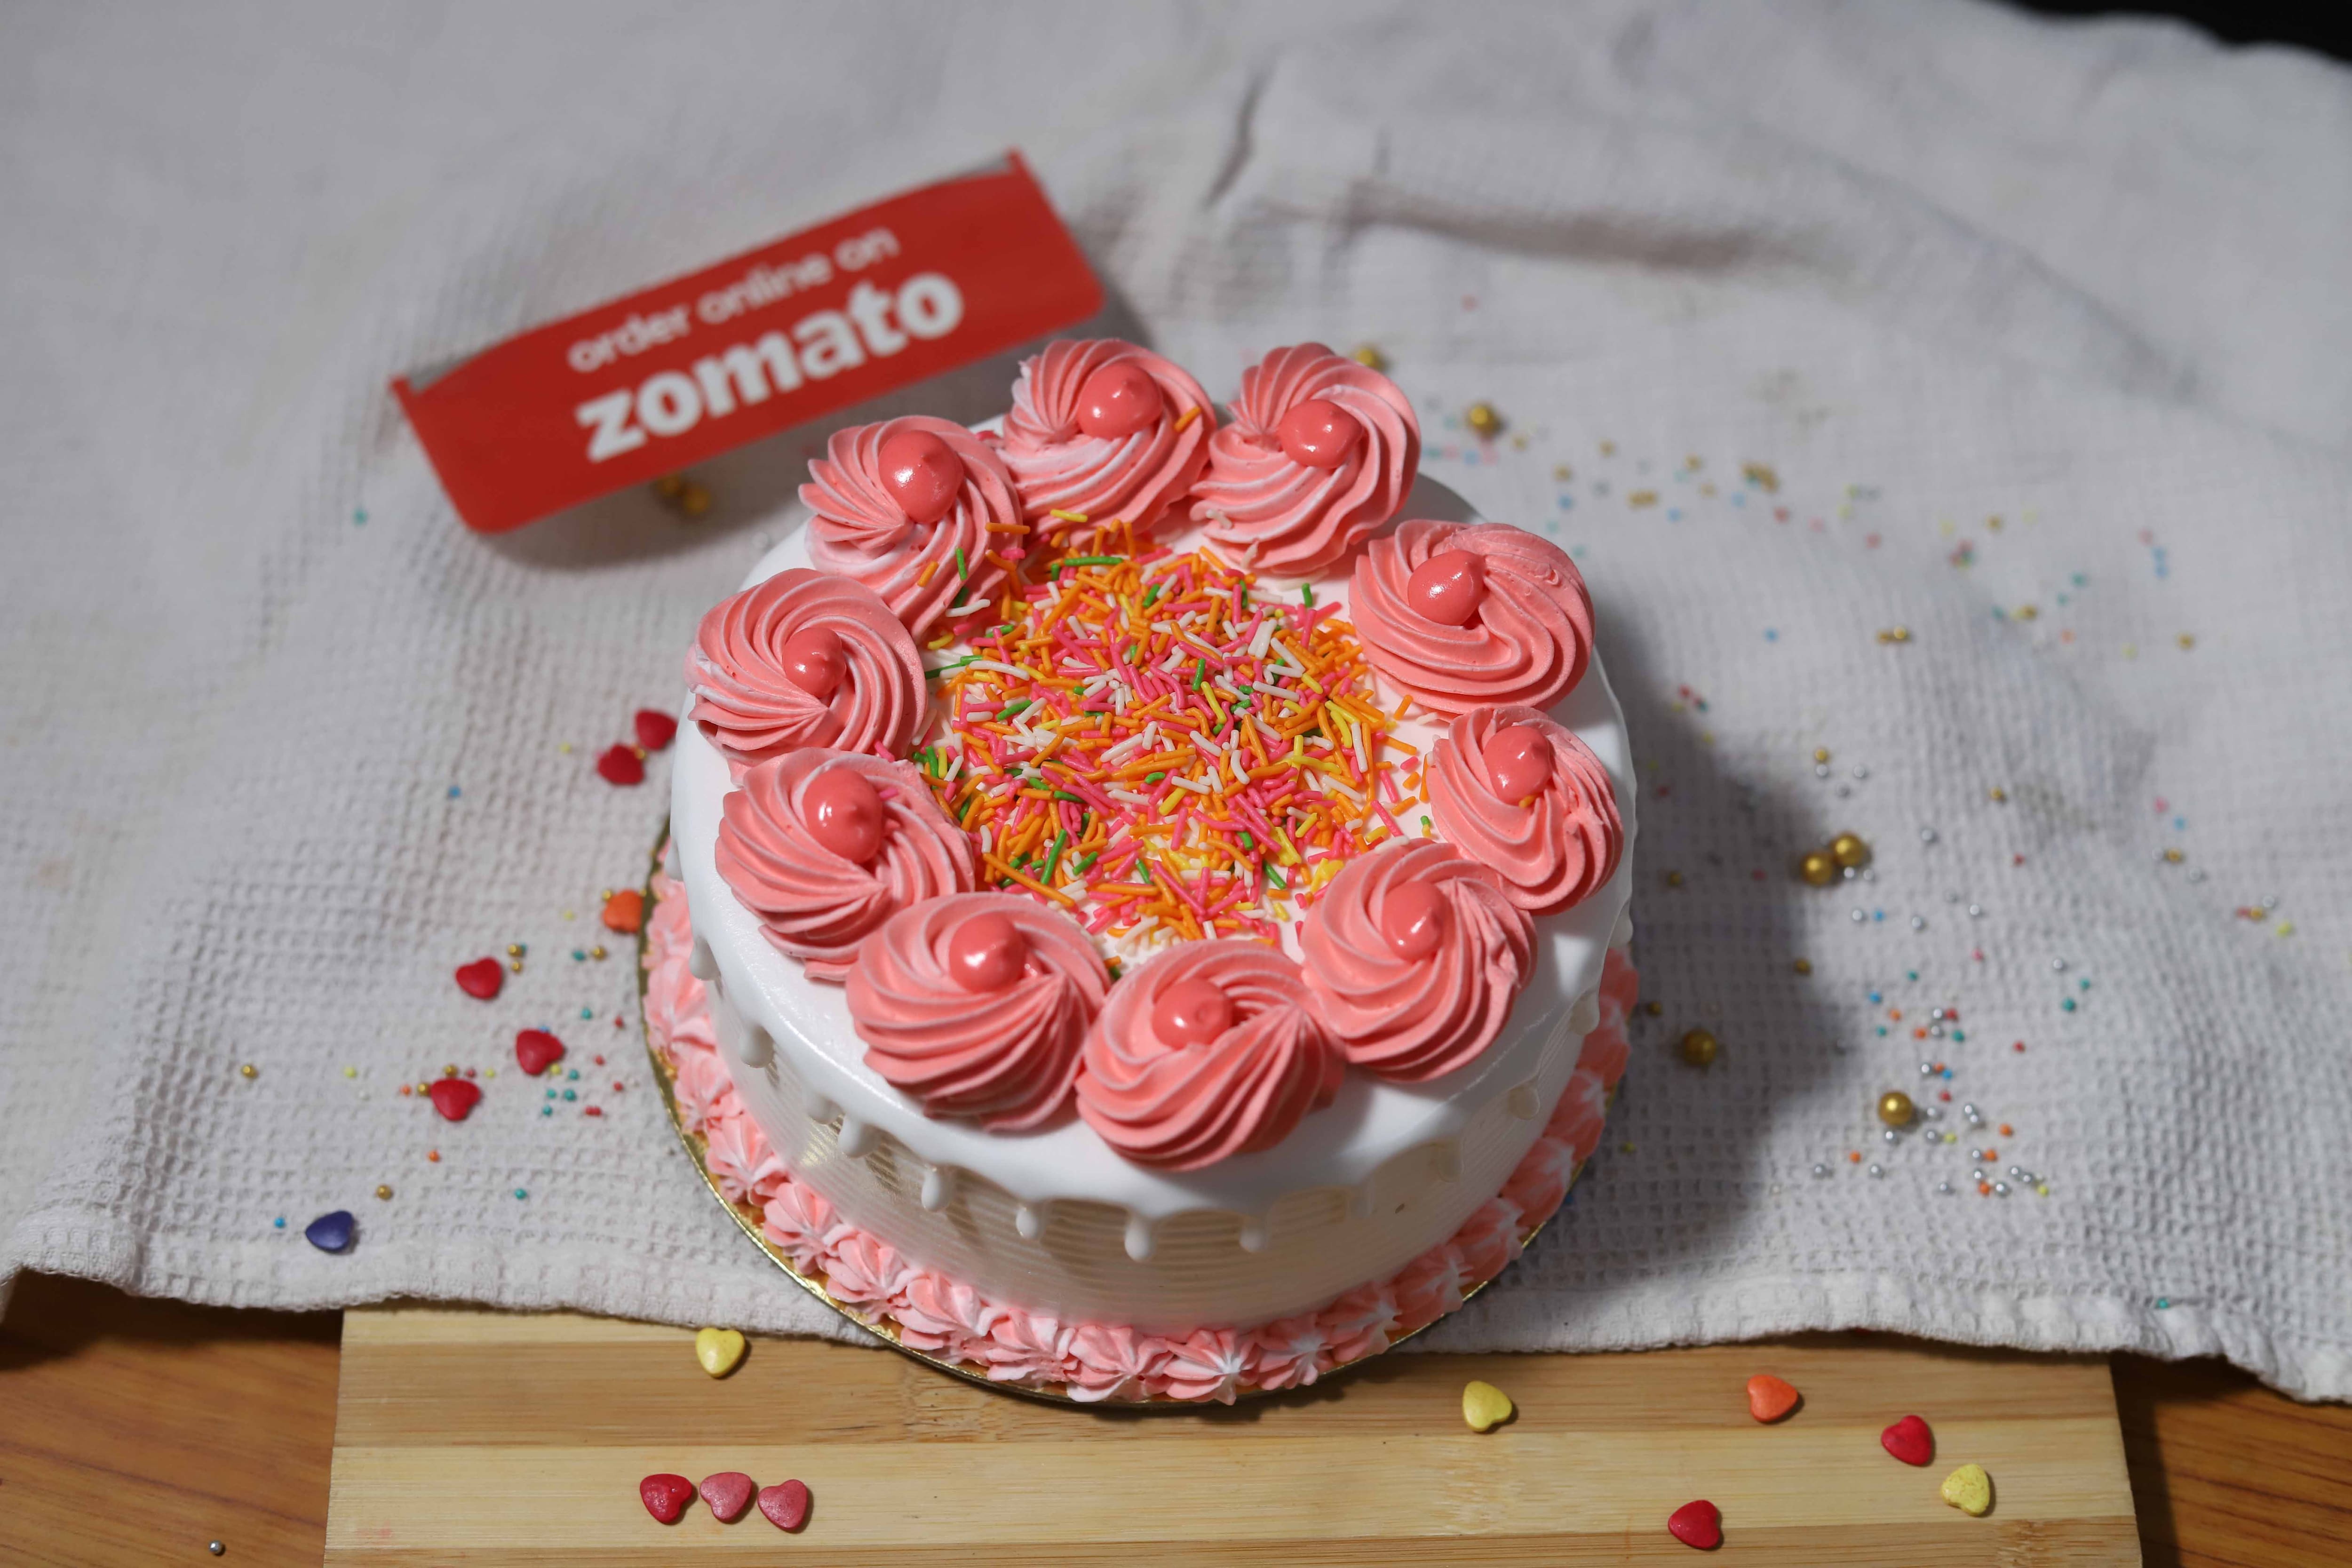 Cakes & More, Mira Road order online - Zomato